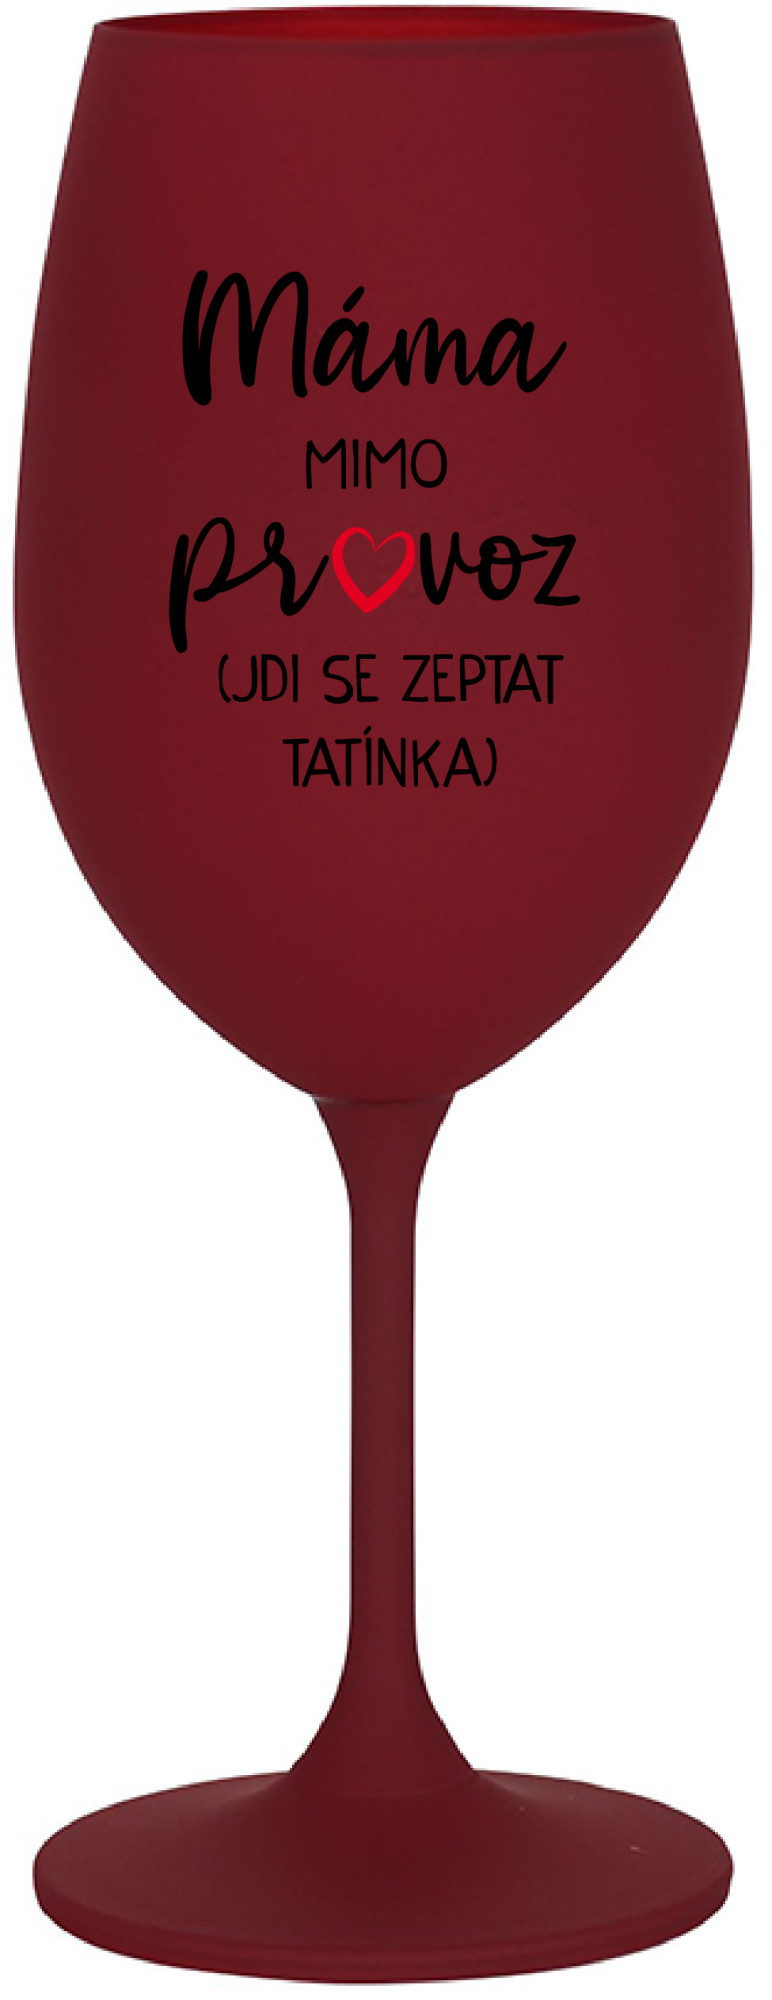 MÁMA MIMO PROVOZ (JDI SE ZEPTAT TATÍNKA) - bordo sklenice na víno 350 ml